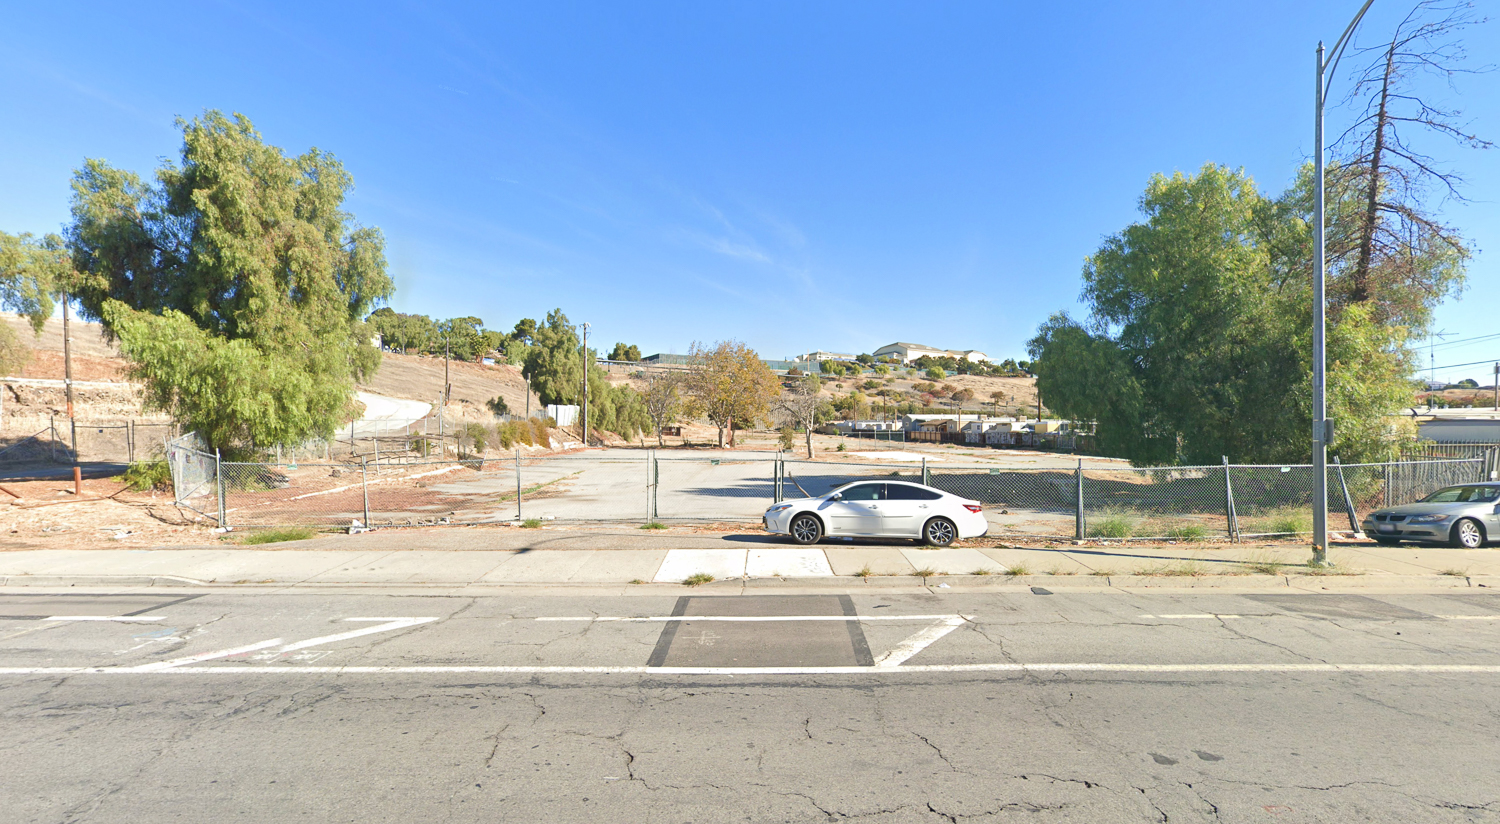 4300 Monterey Street, image via Google Street View